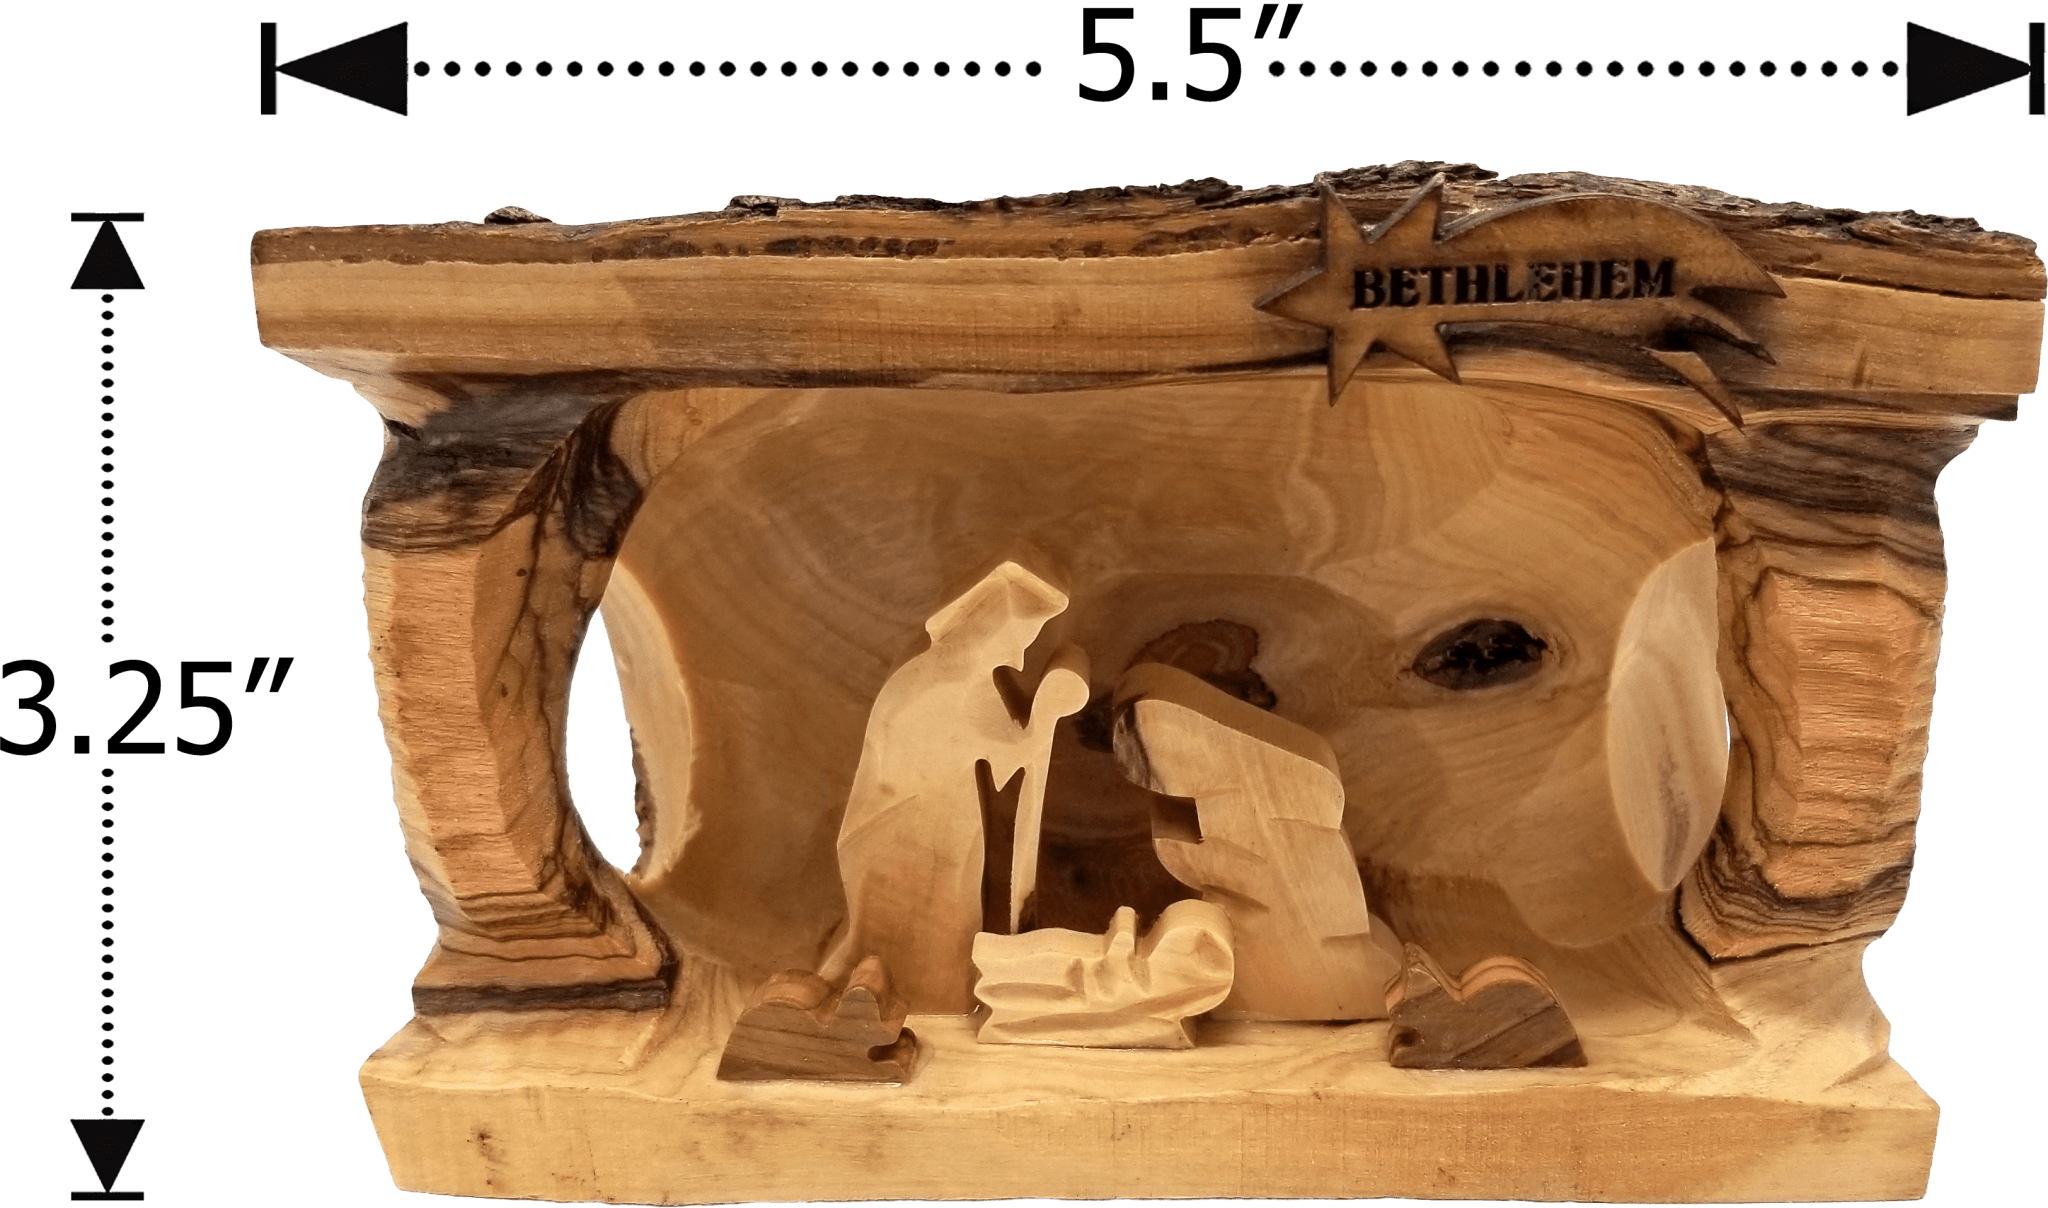 Nativity Grotto Log With Bark 3D Holy Land Olive Wood  - Large- Made in Bethlehem